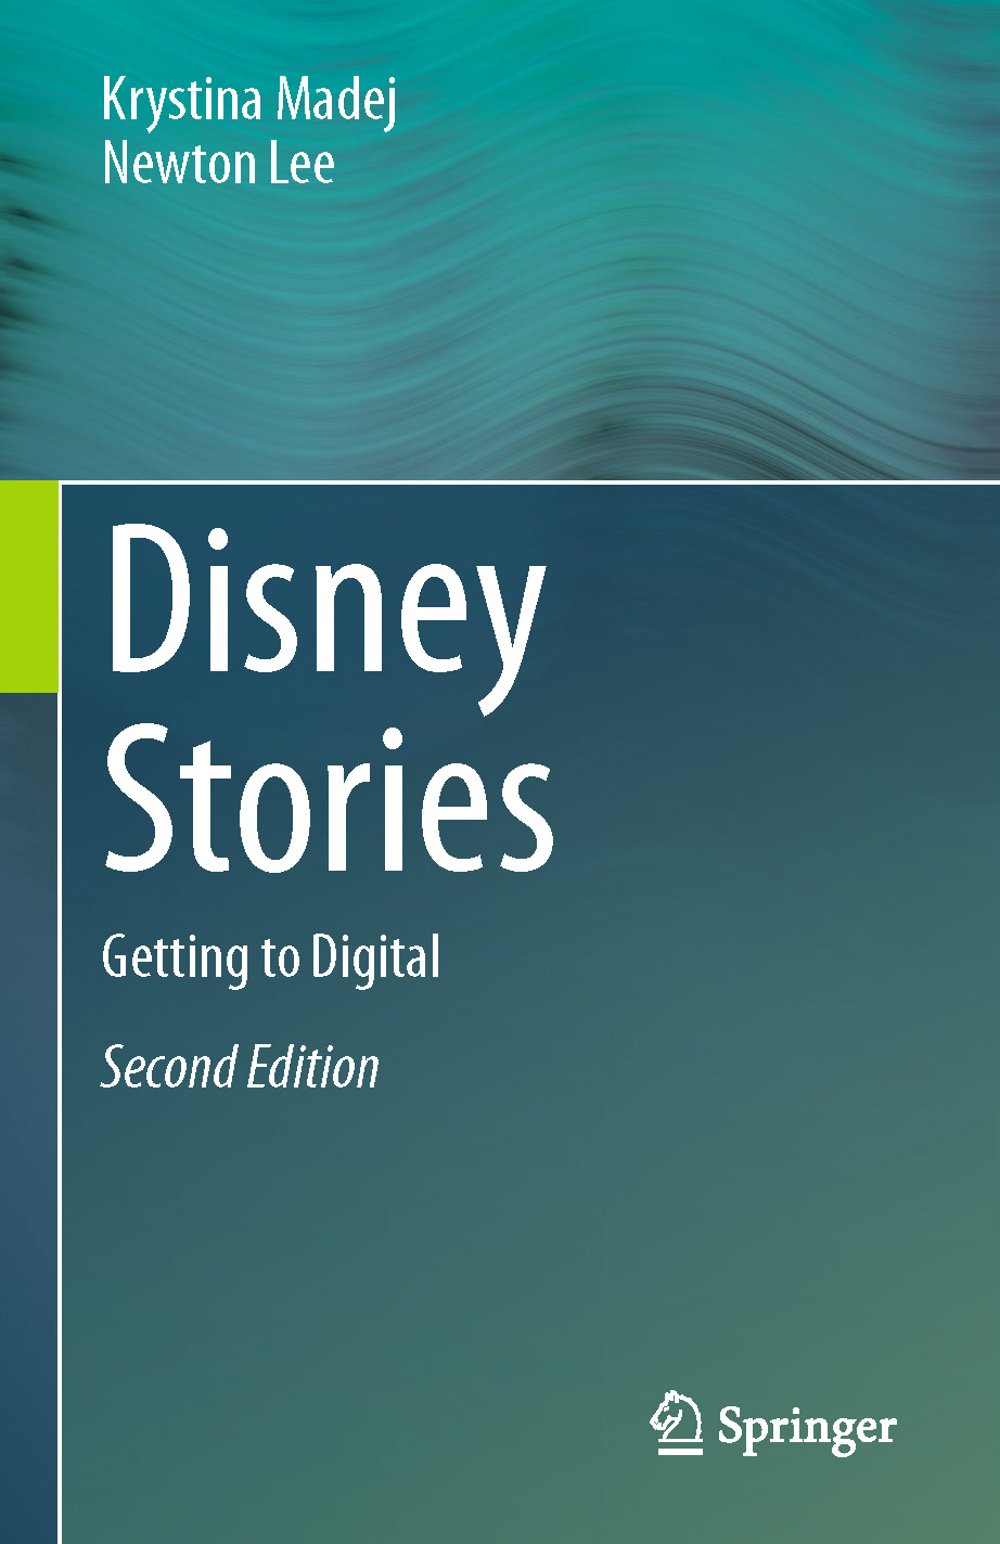 Disney Stories: Getting to Digital by Krystina Madej and Newton Lee